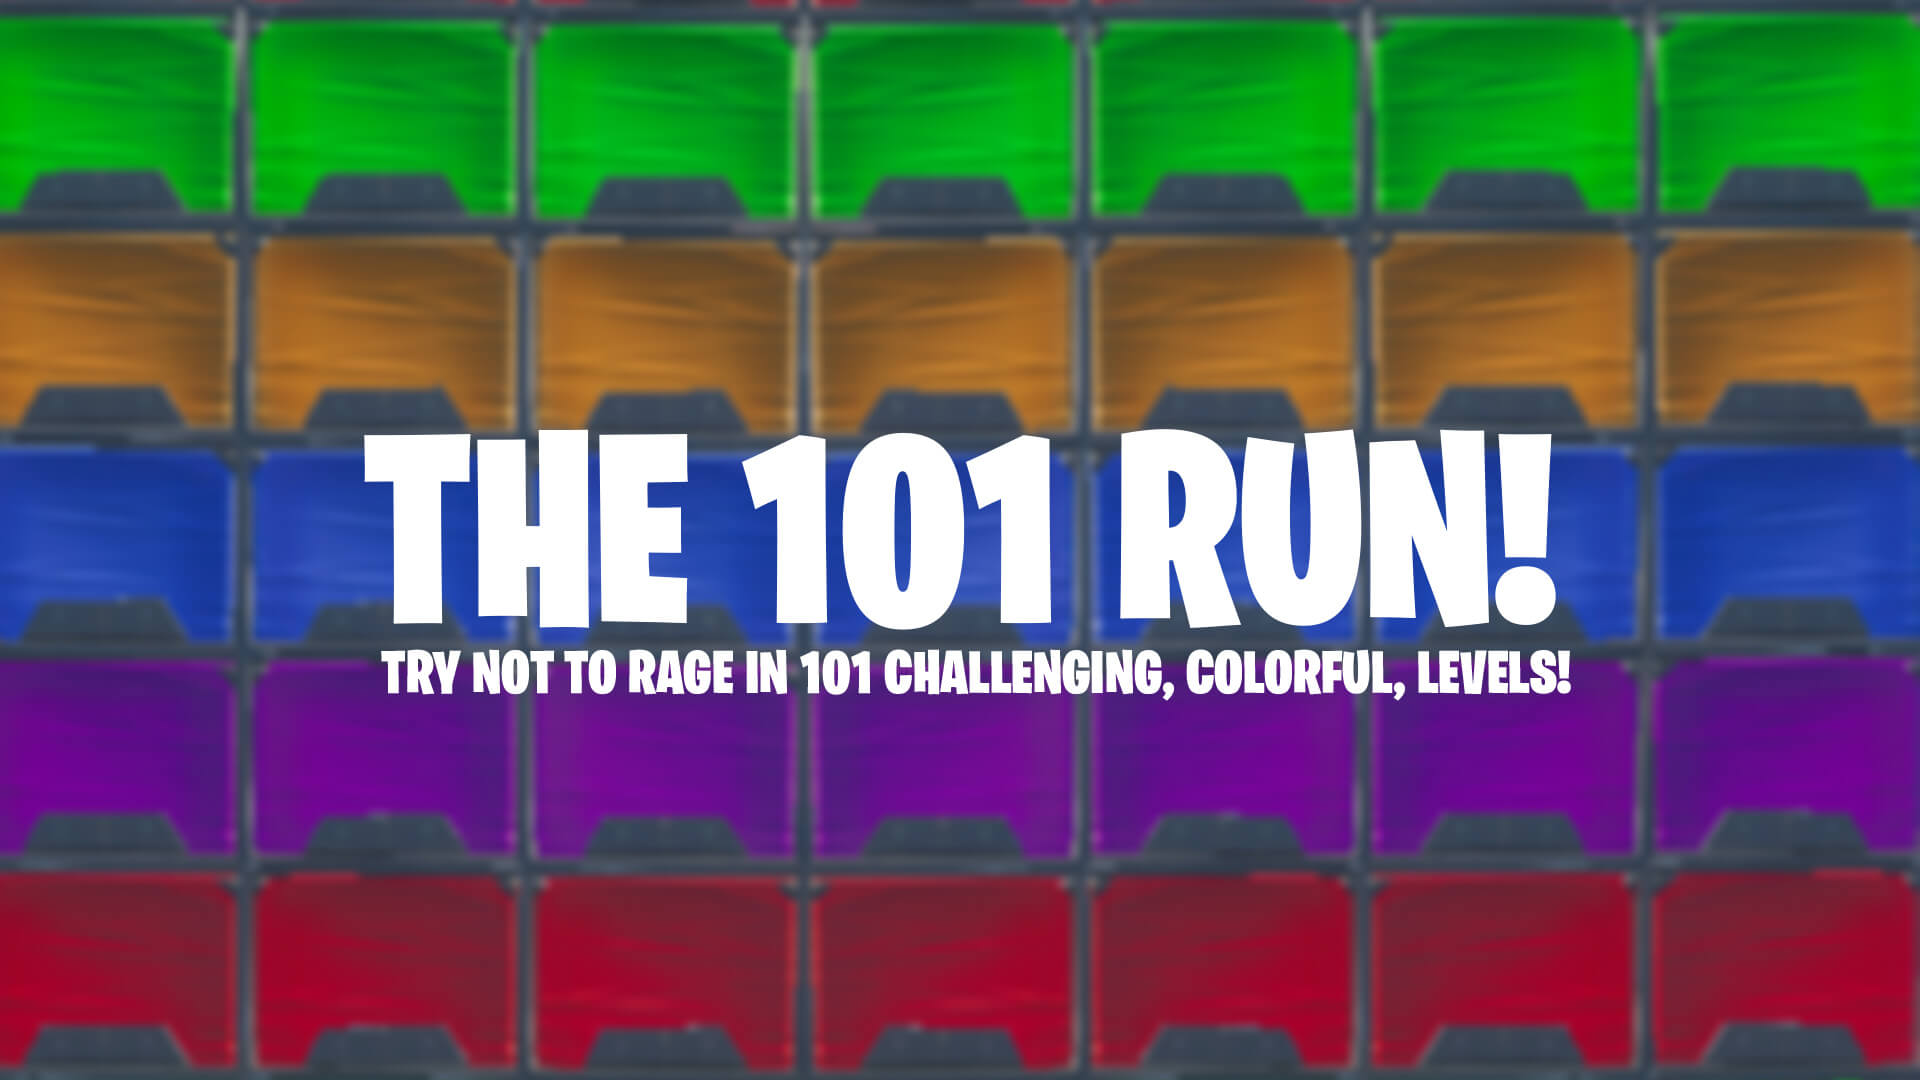 THE 101 RUN!